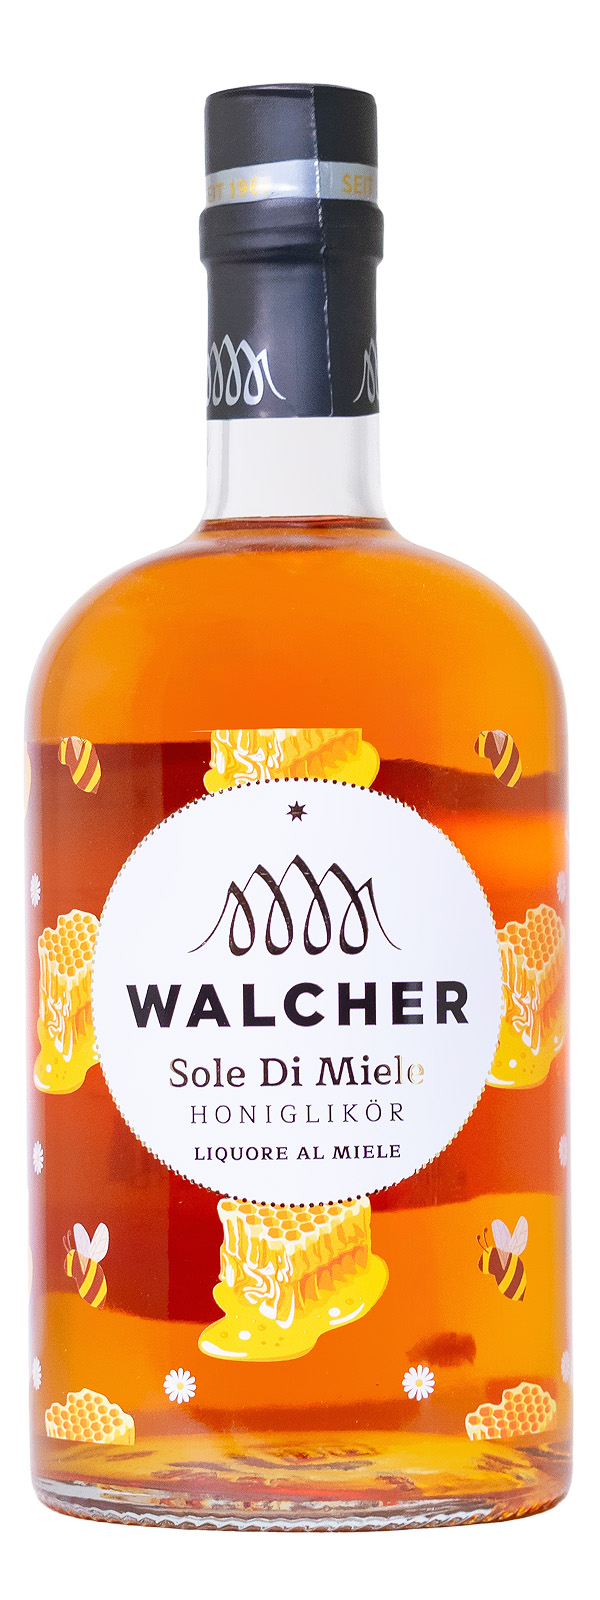 Walcher Sole di Miele Honiglikör - 0,7L 38% vol